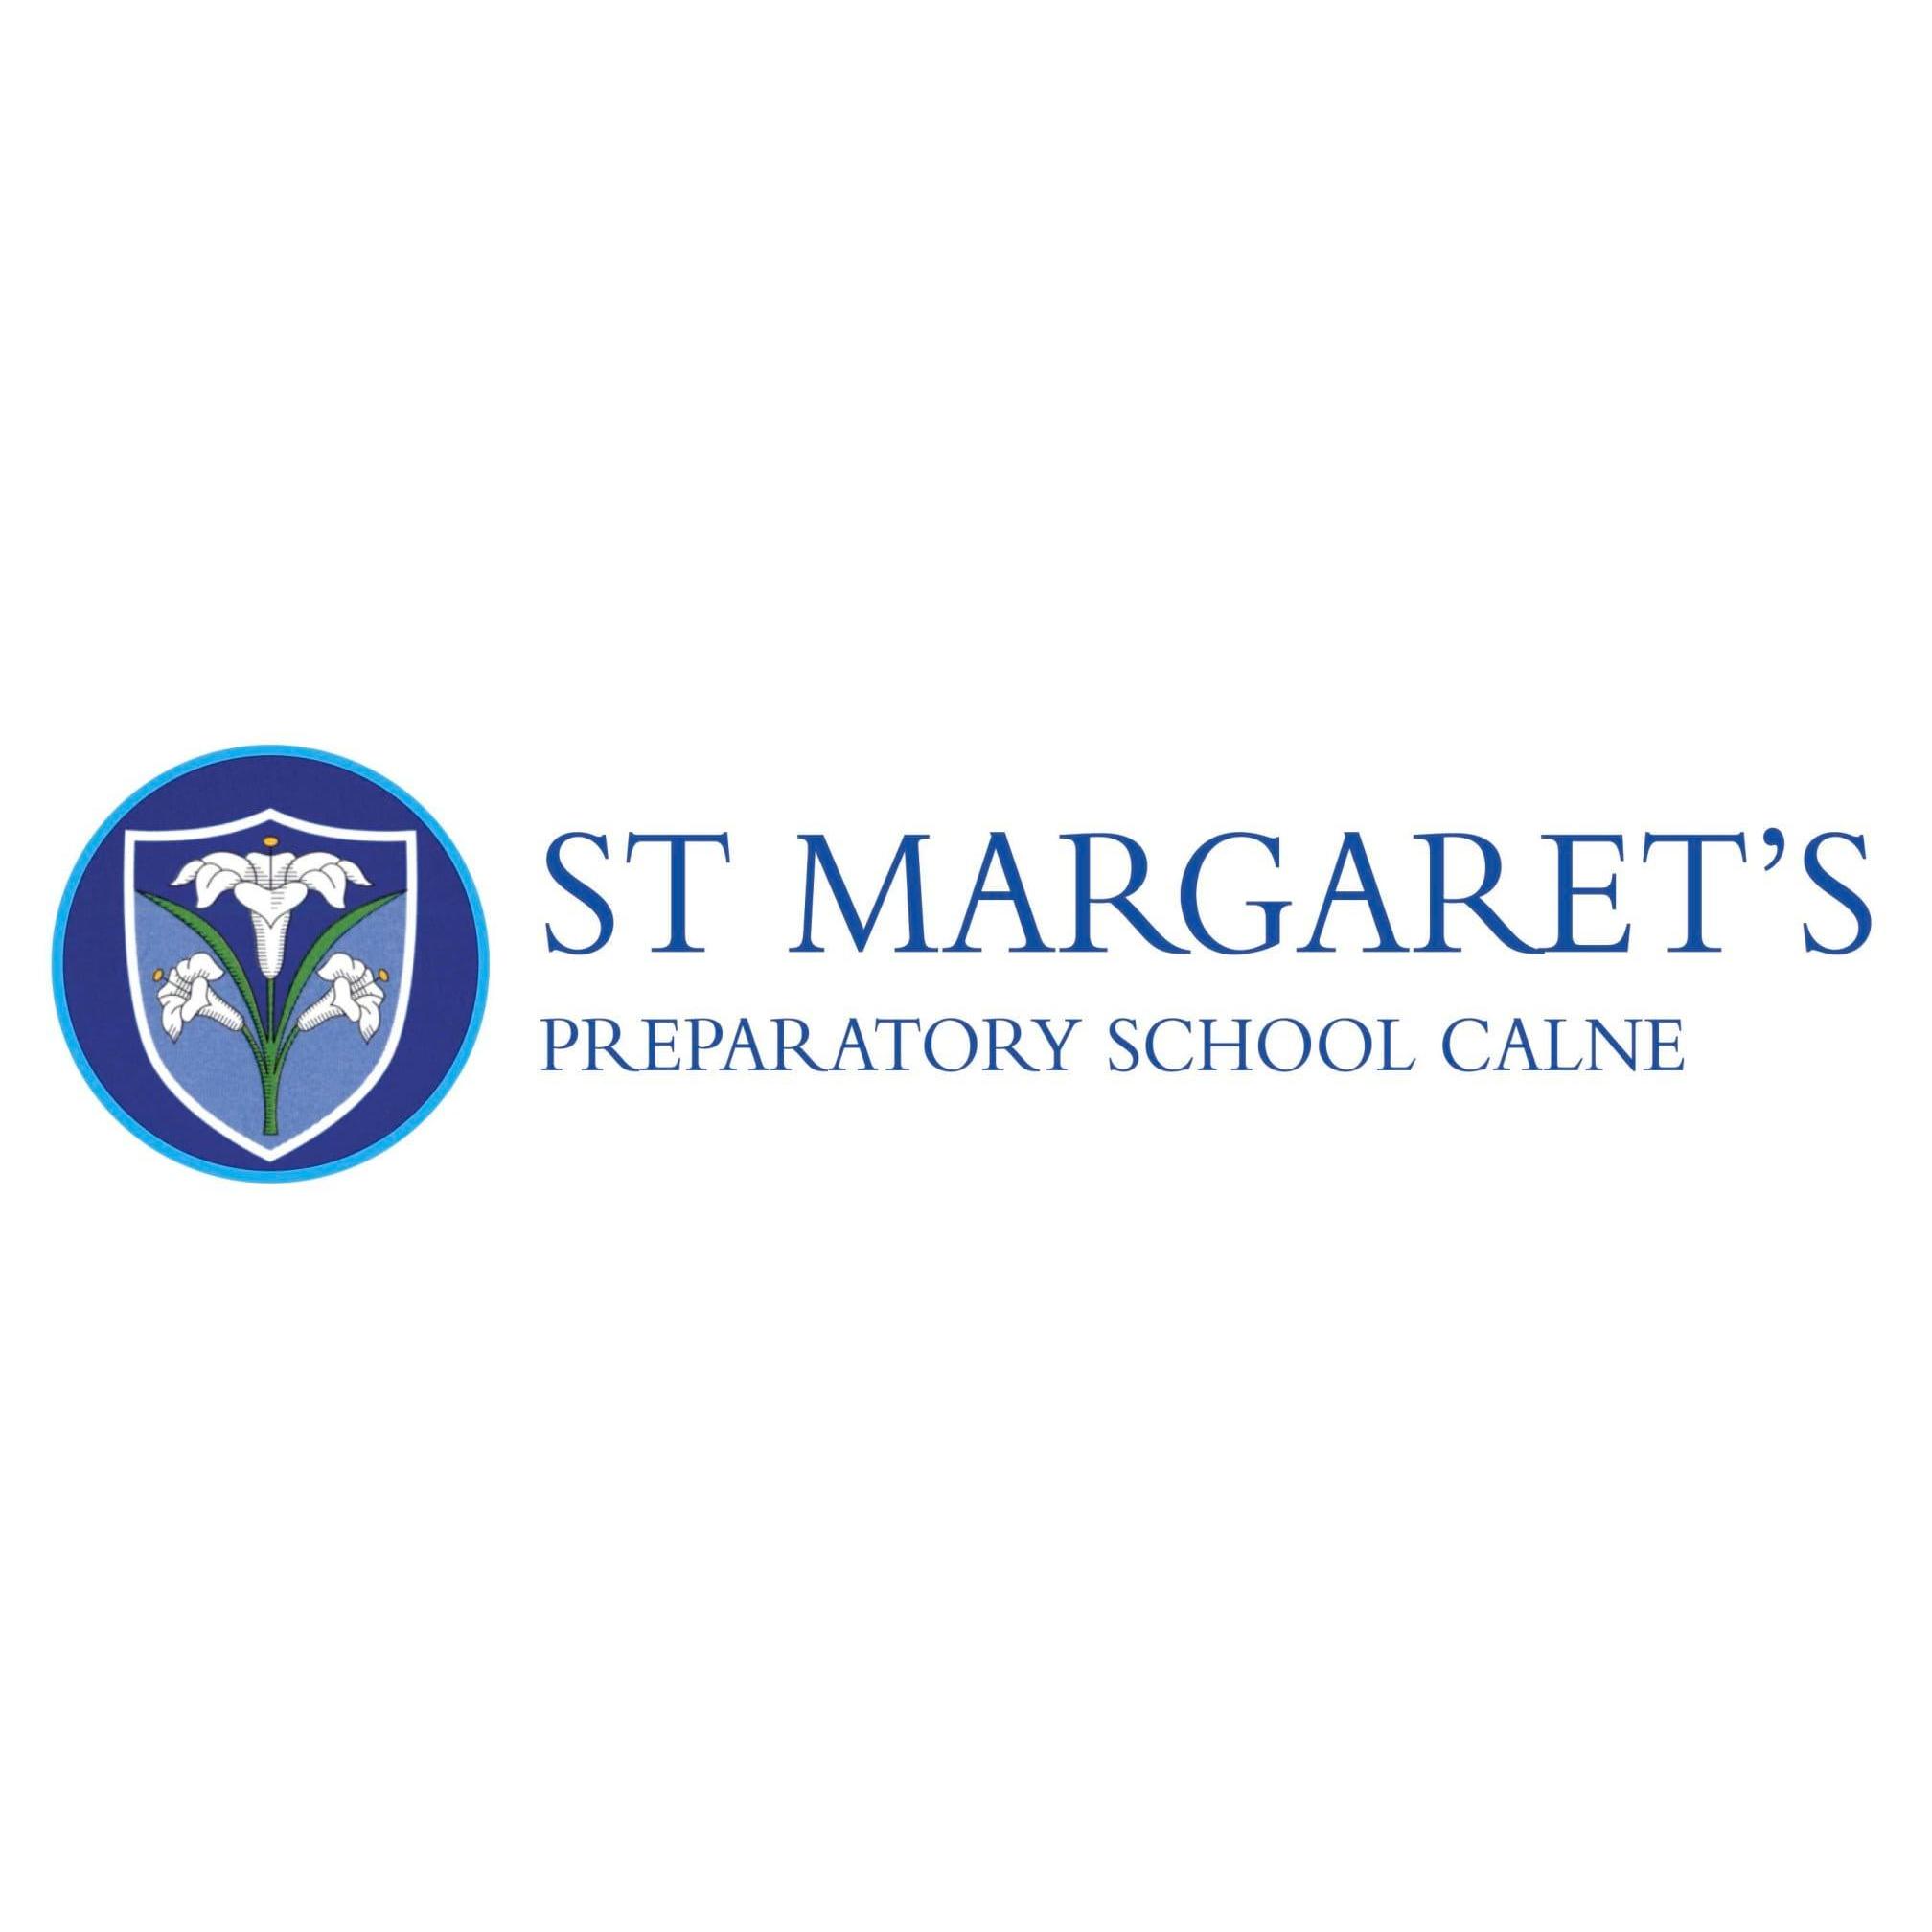 LOGO St. Margaret's Preparatory School Calne 01249 857220